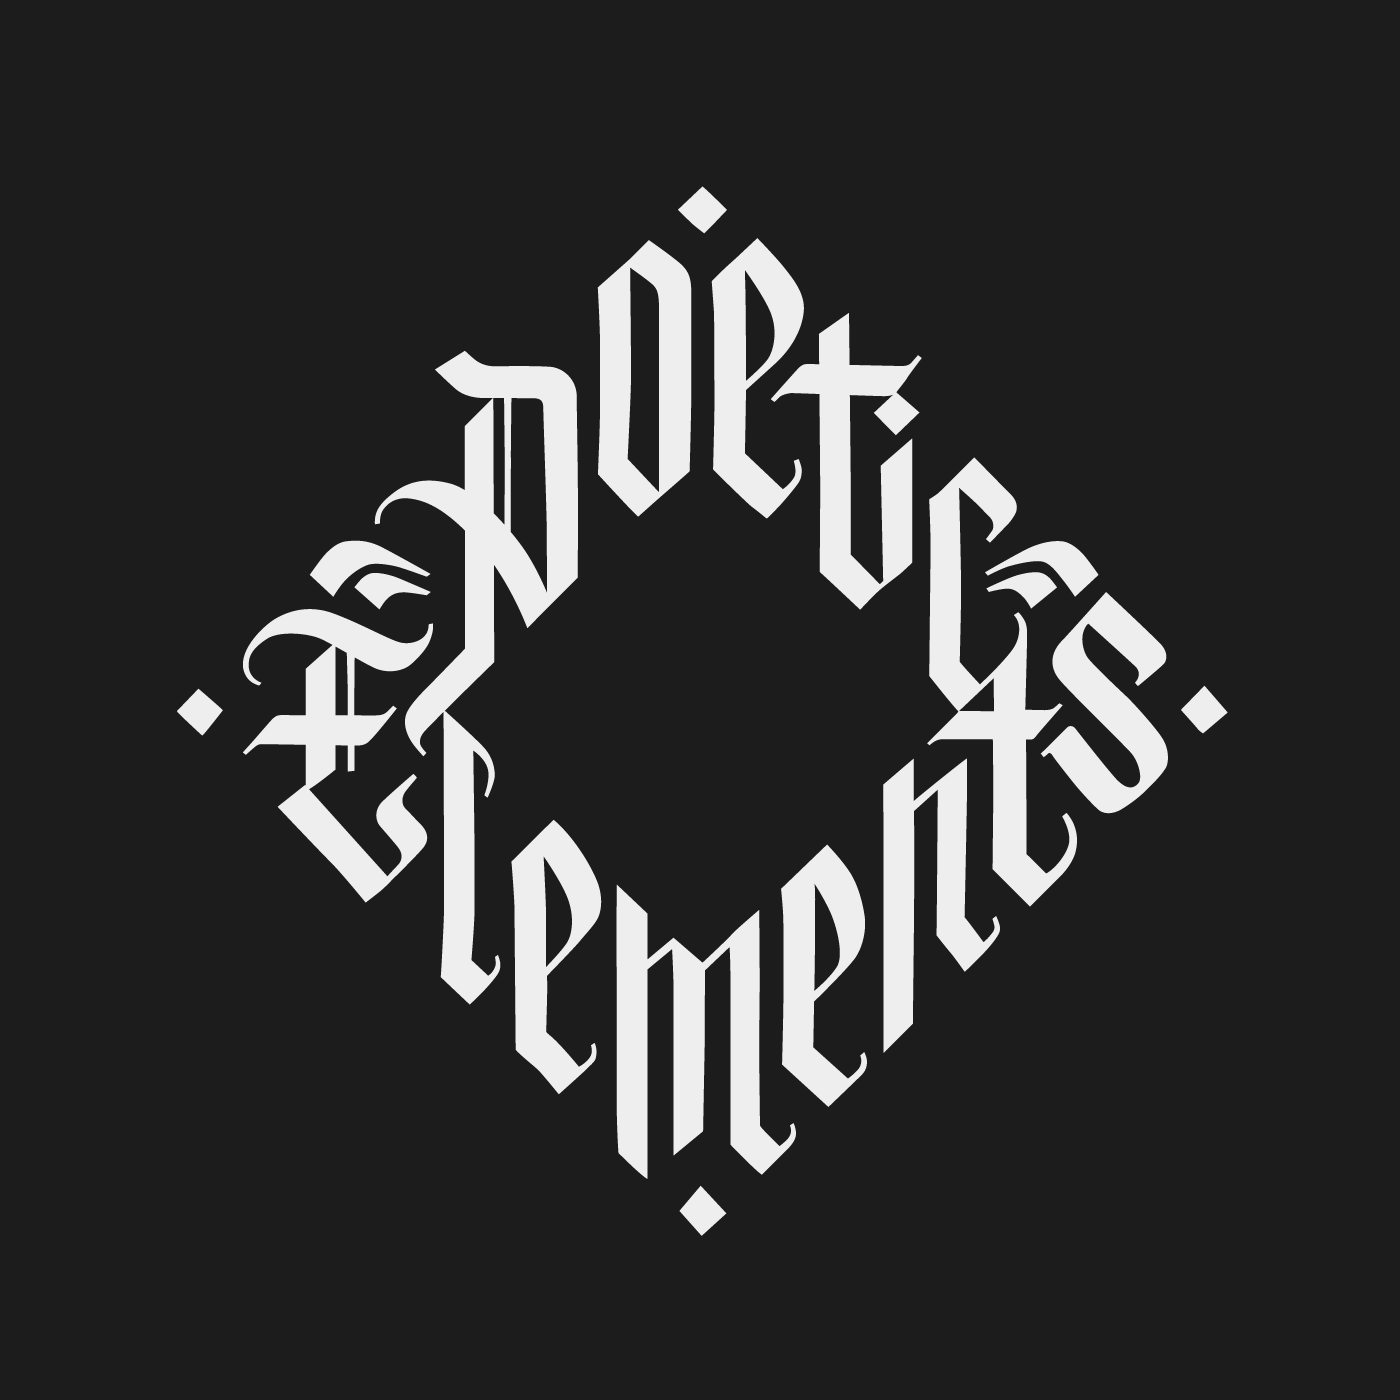 New logo for Poetic Elements